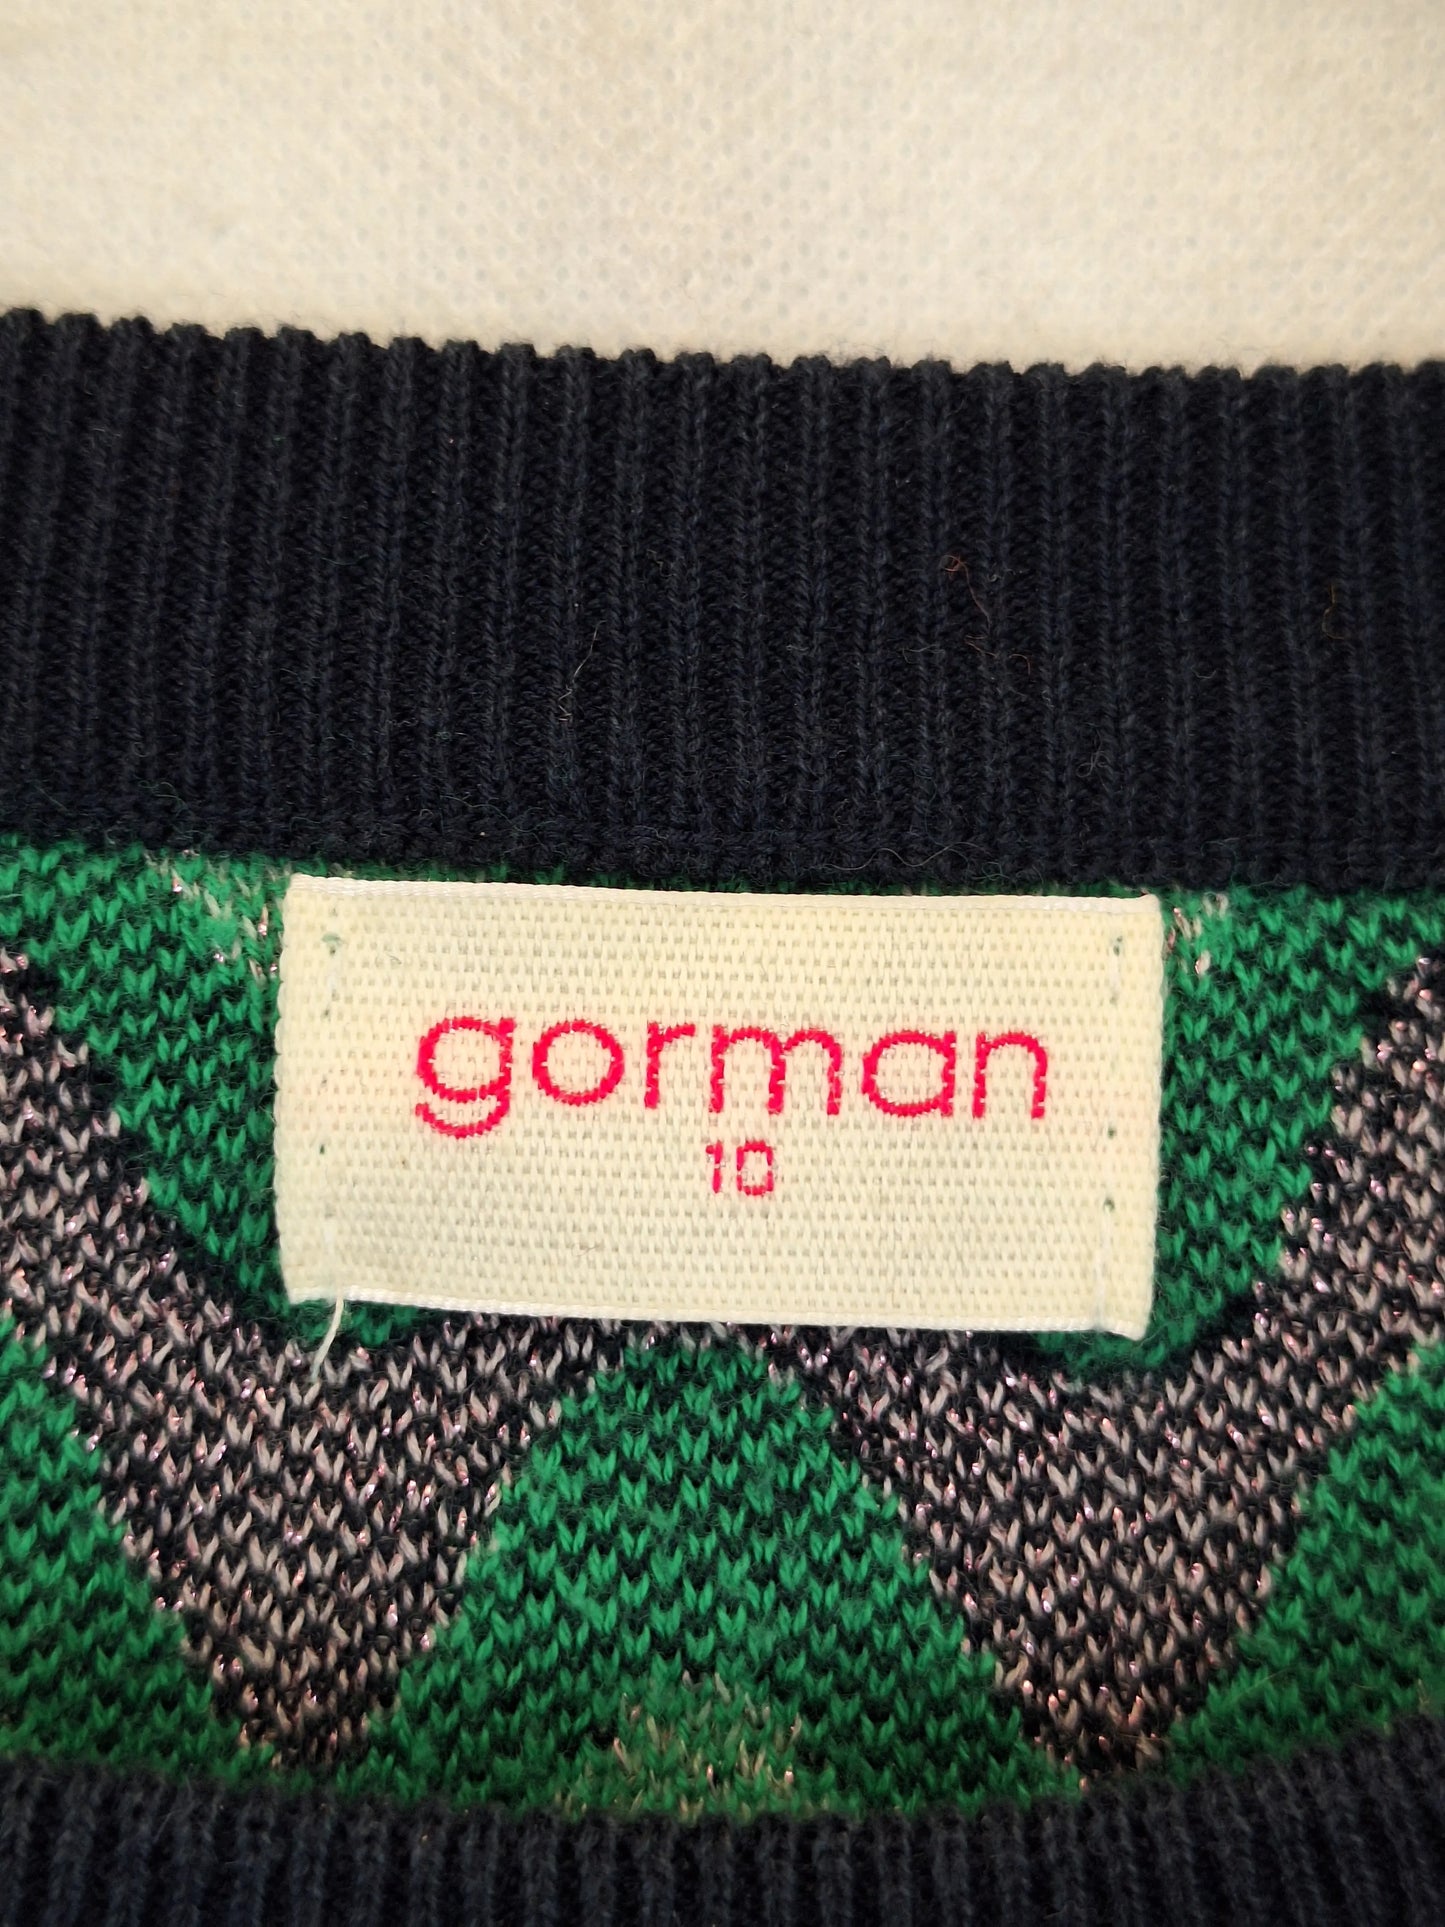 Gorman Zig Zag Metallic Knit Jumper Size 10 by SwapUp-Online Second Hand Store-Online Thrift Store